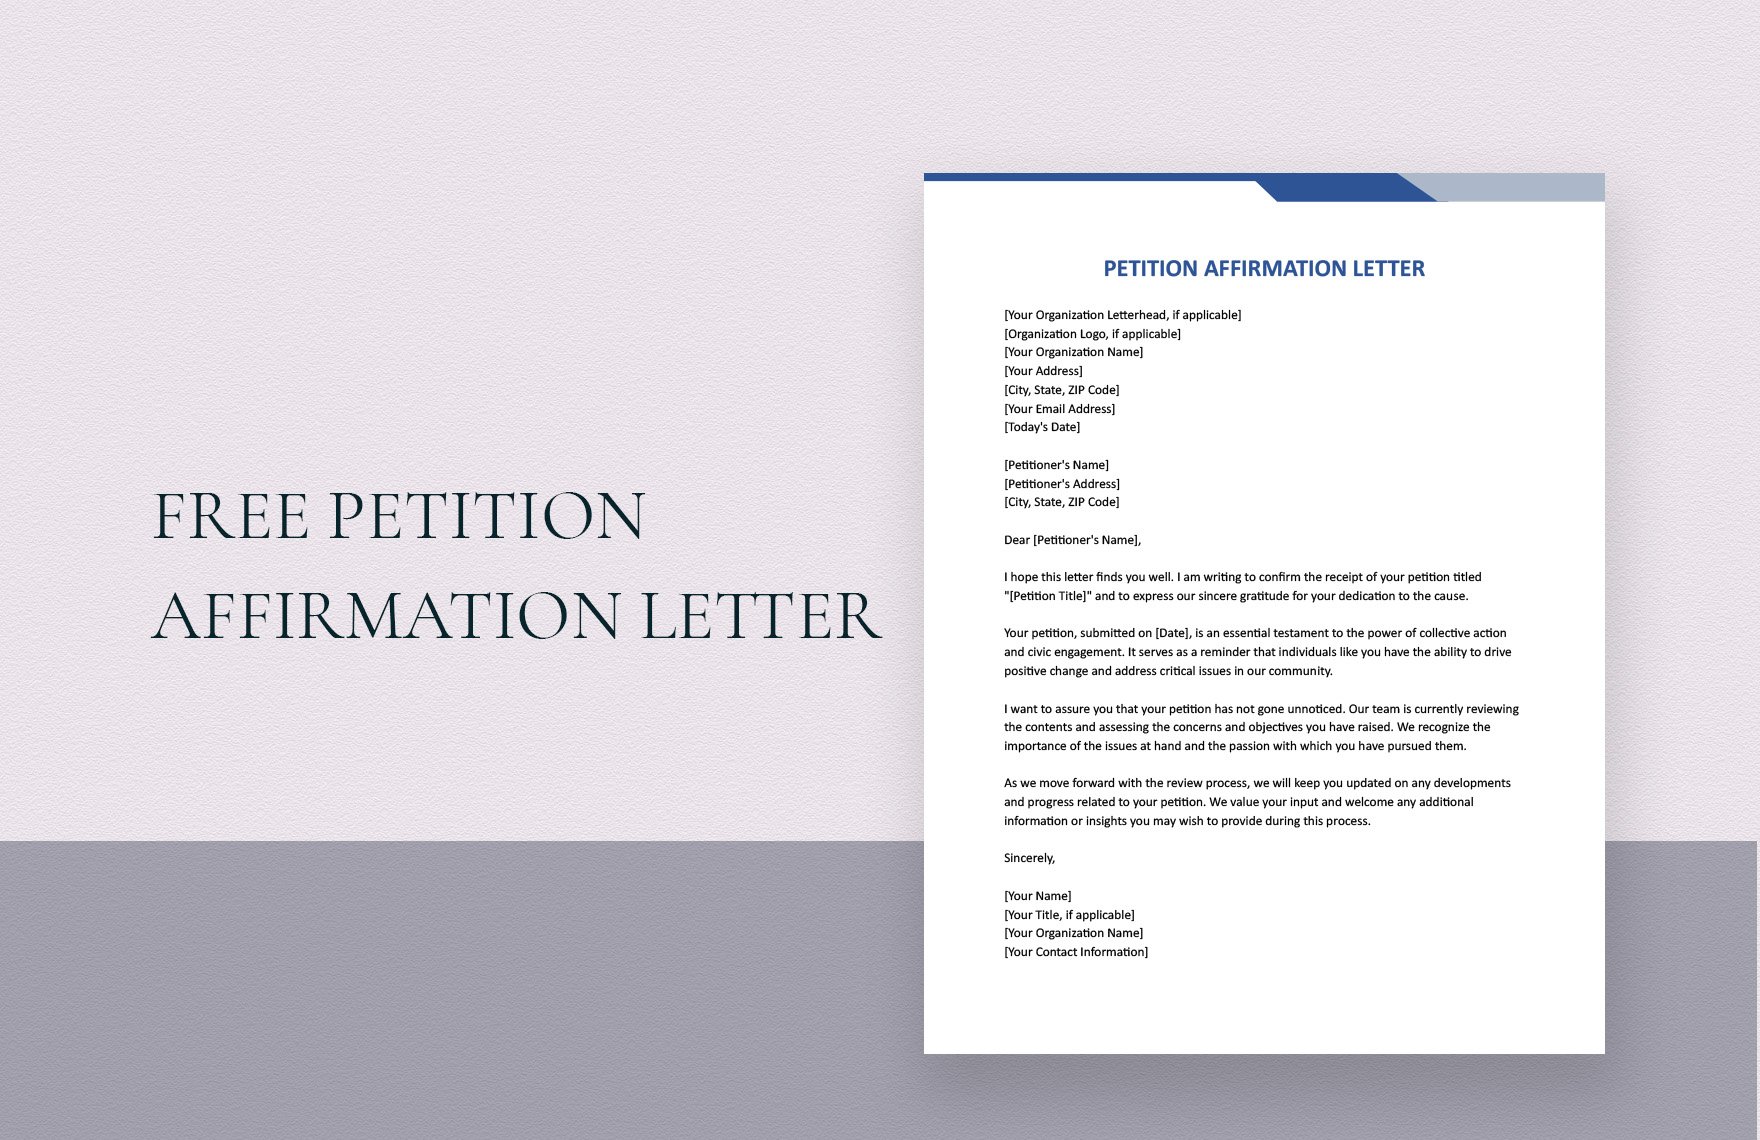 Petition Affirmation Letter